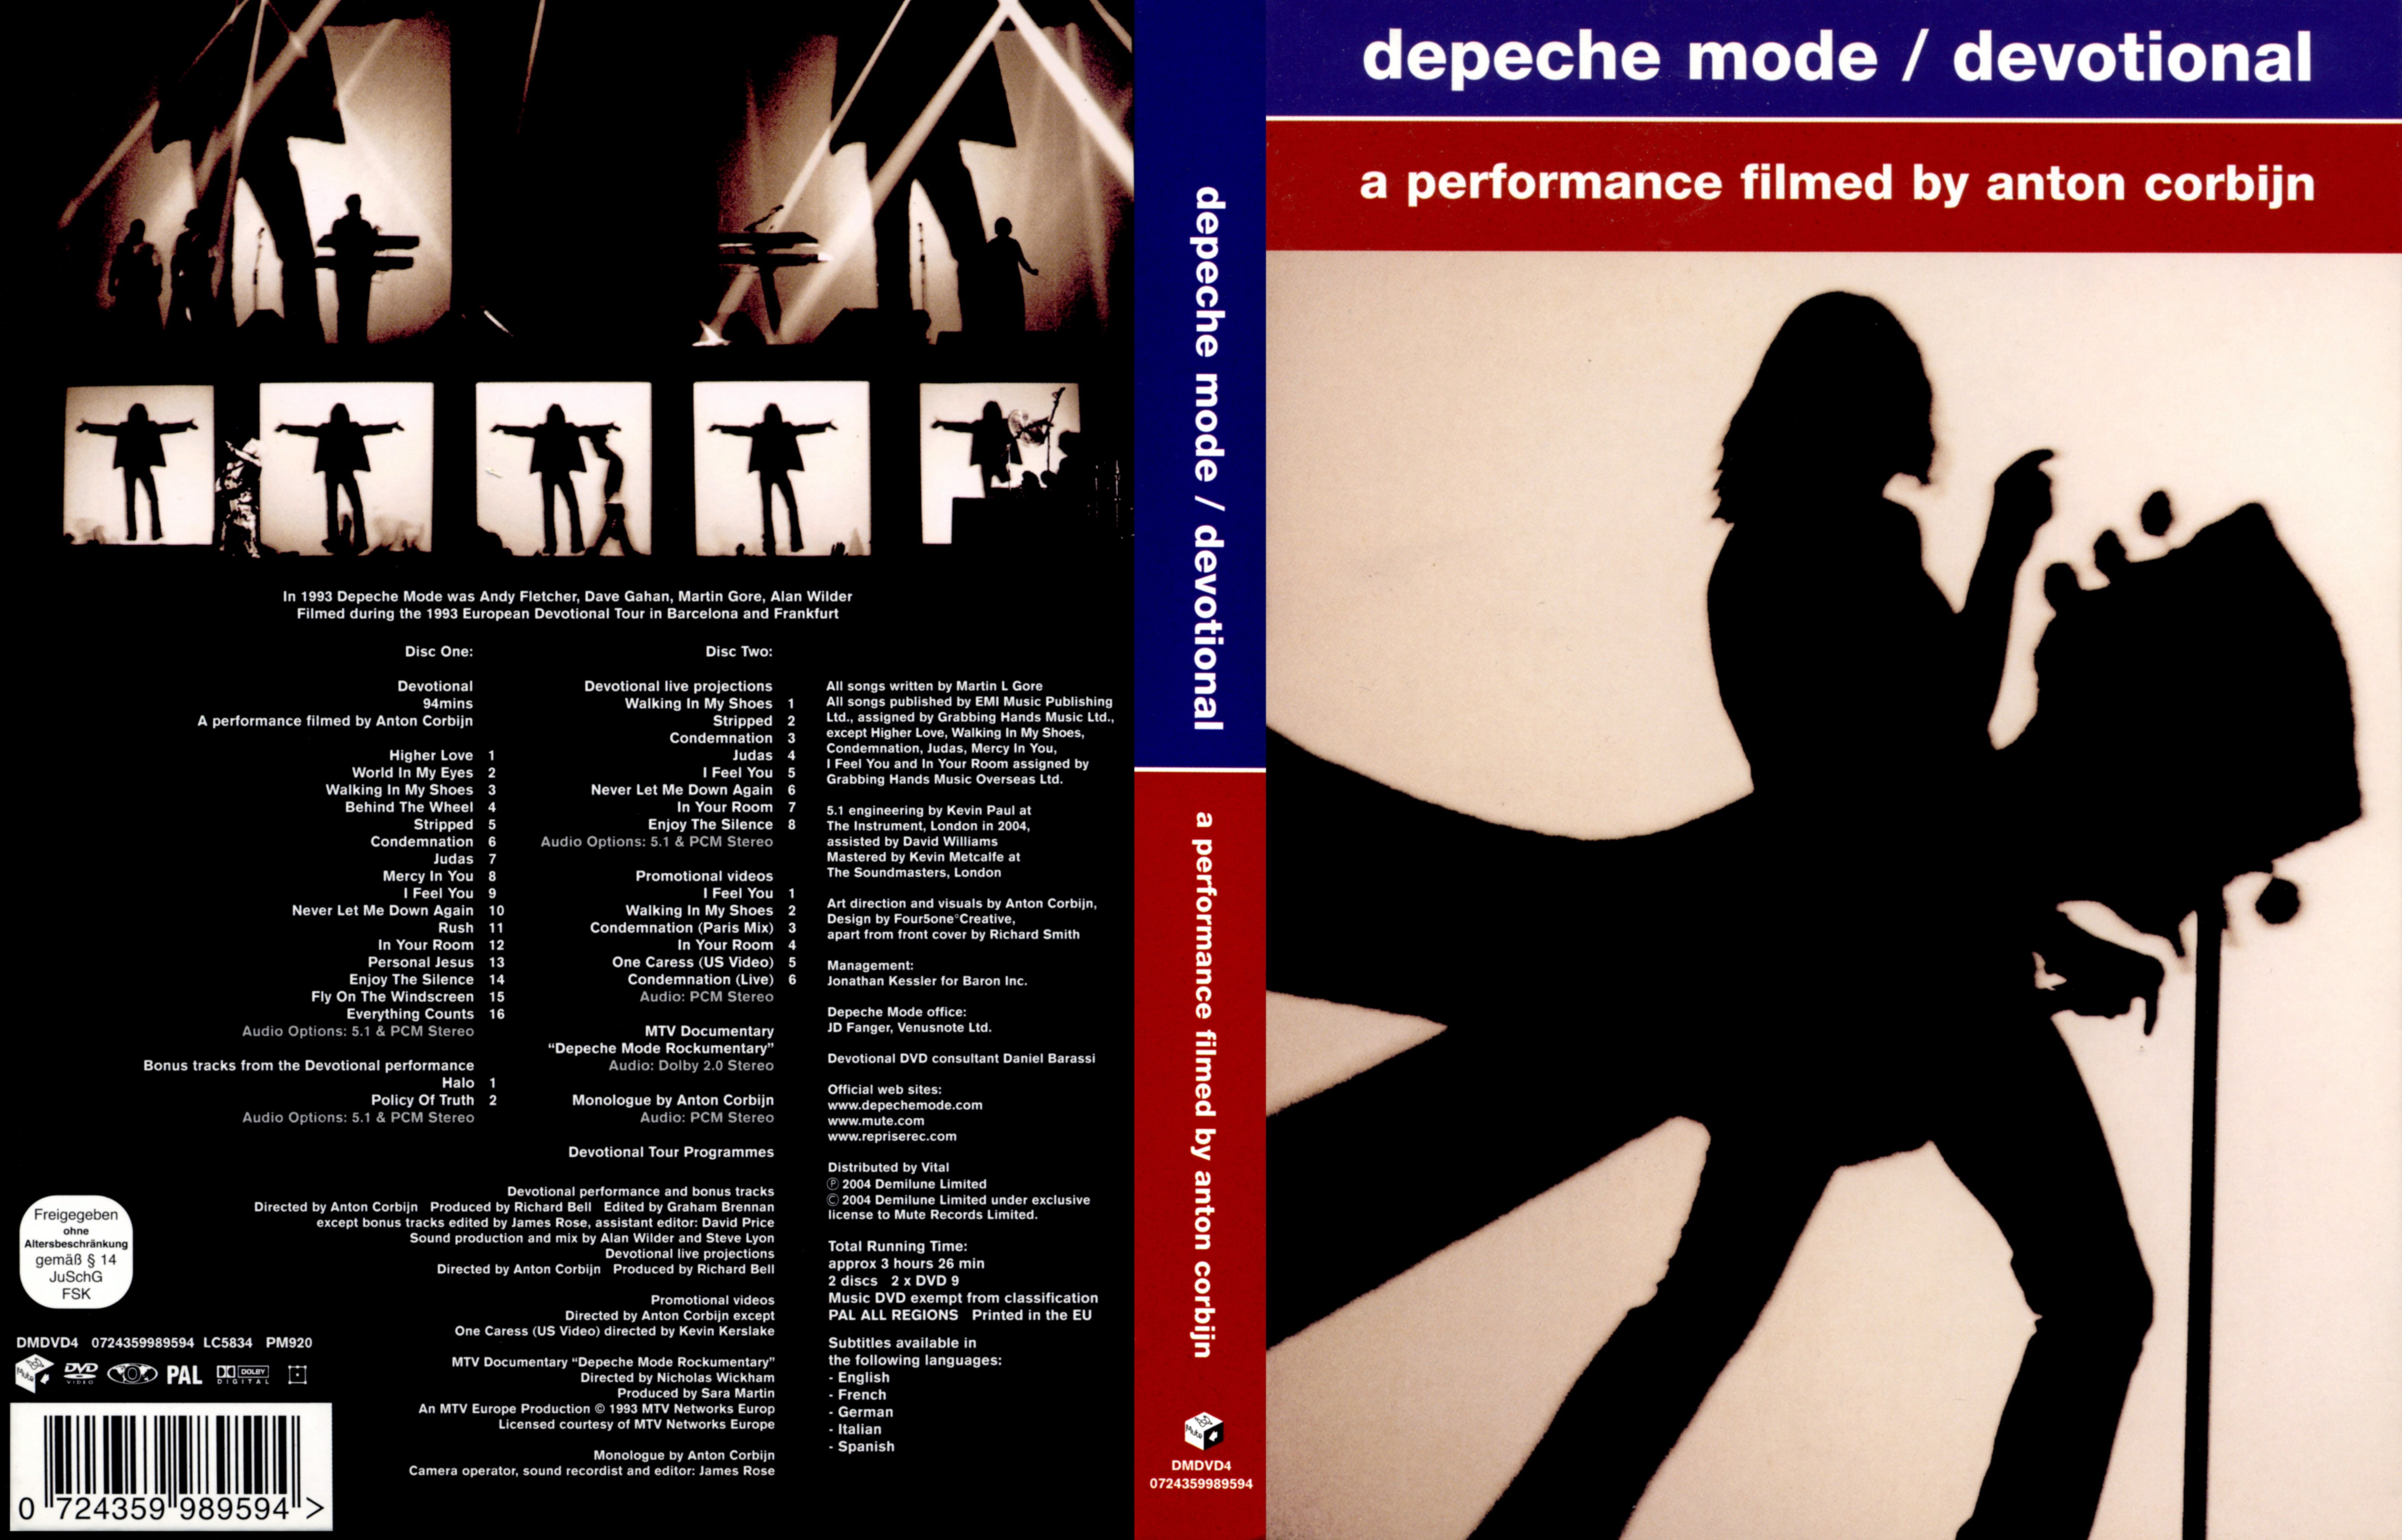 Jaquette DVD Depeche mode devotional